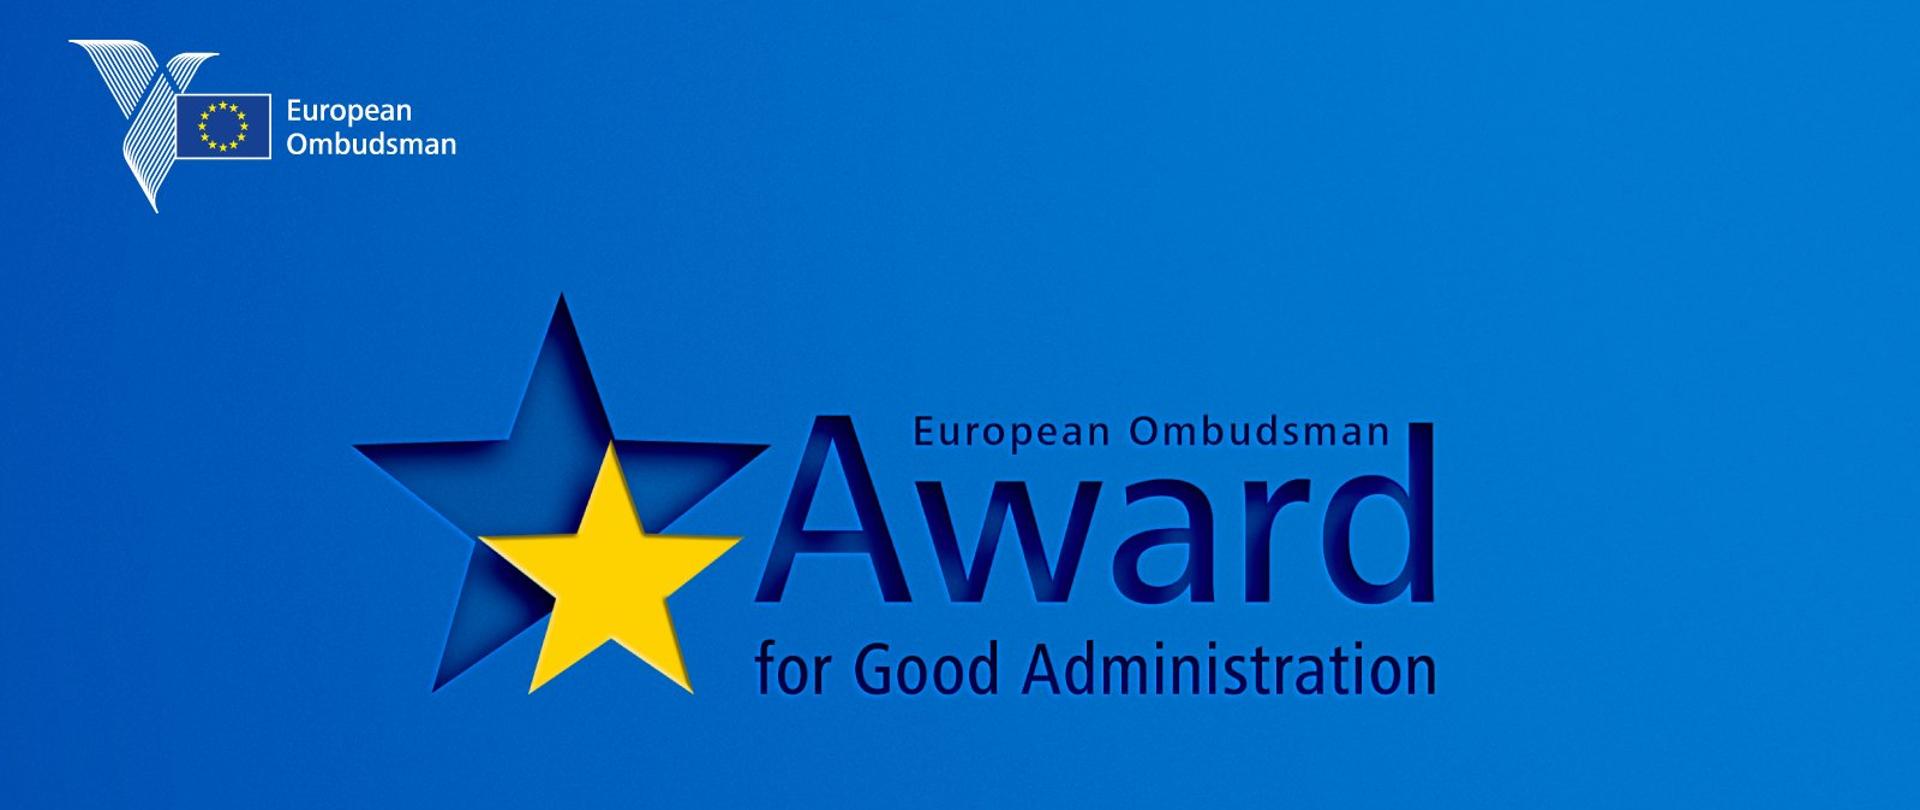 Award for Good Administration